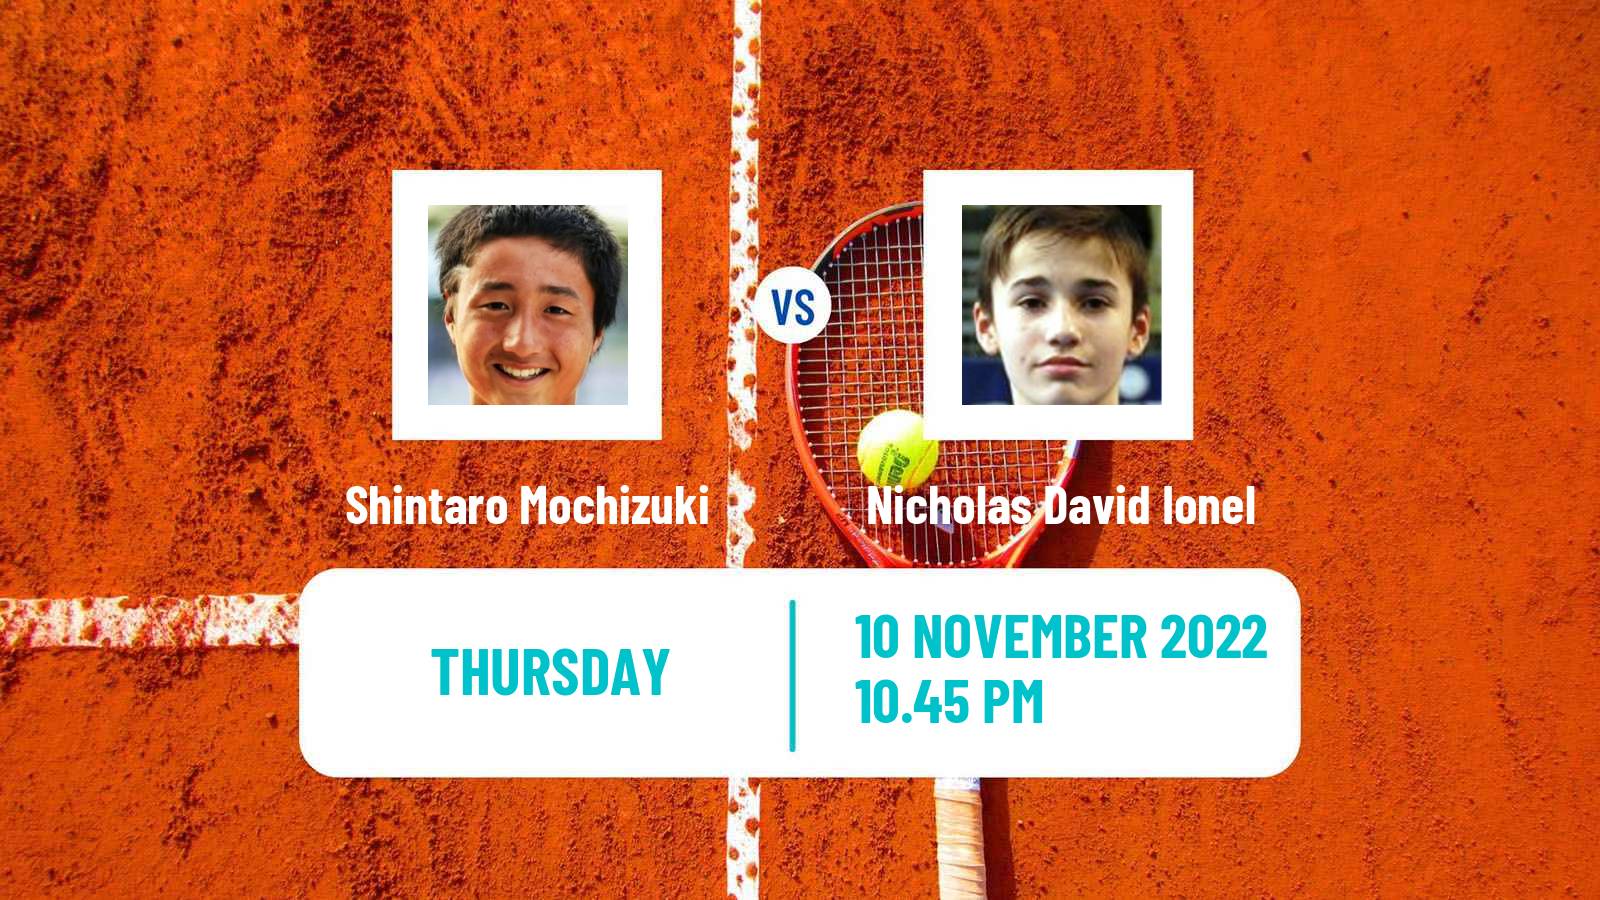 Tennis ATP Challenger Shintaro Mochizuki - Nicholas David Ionel